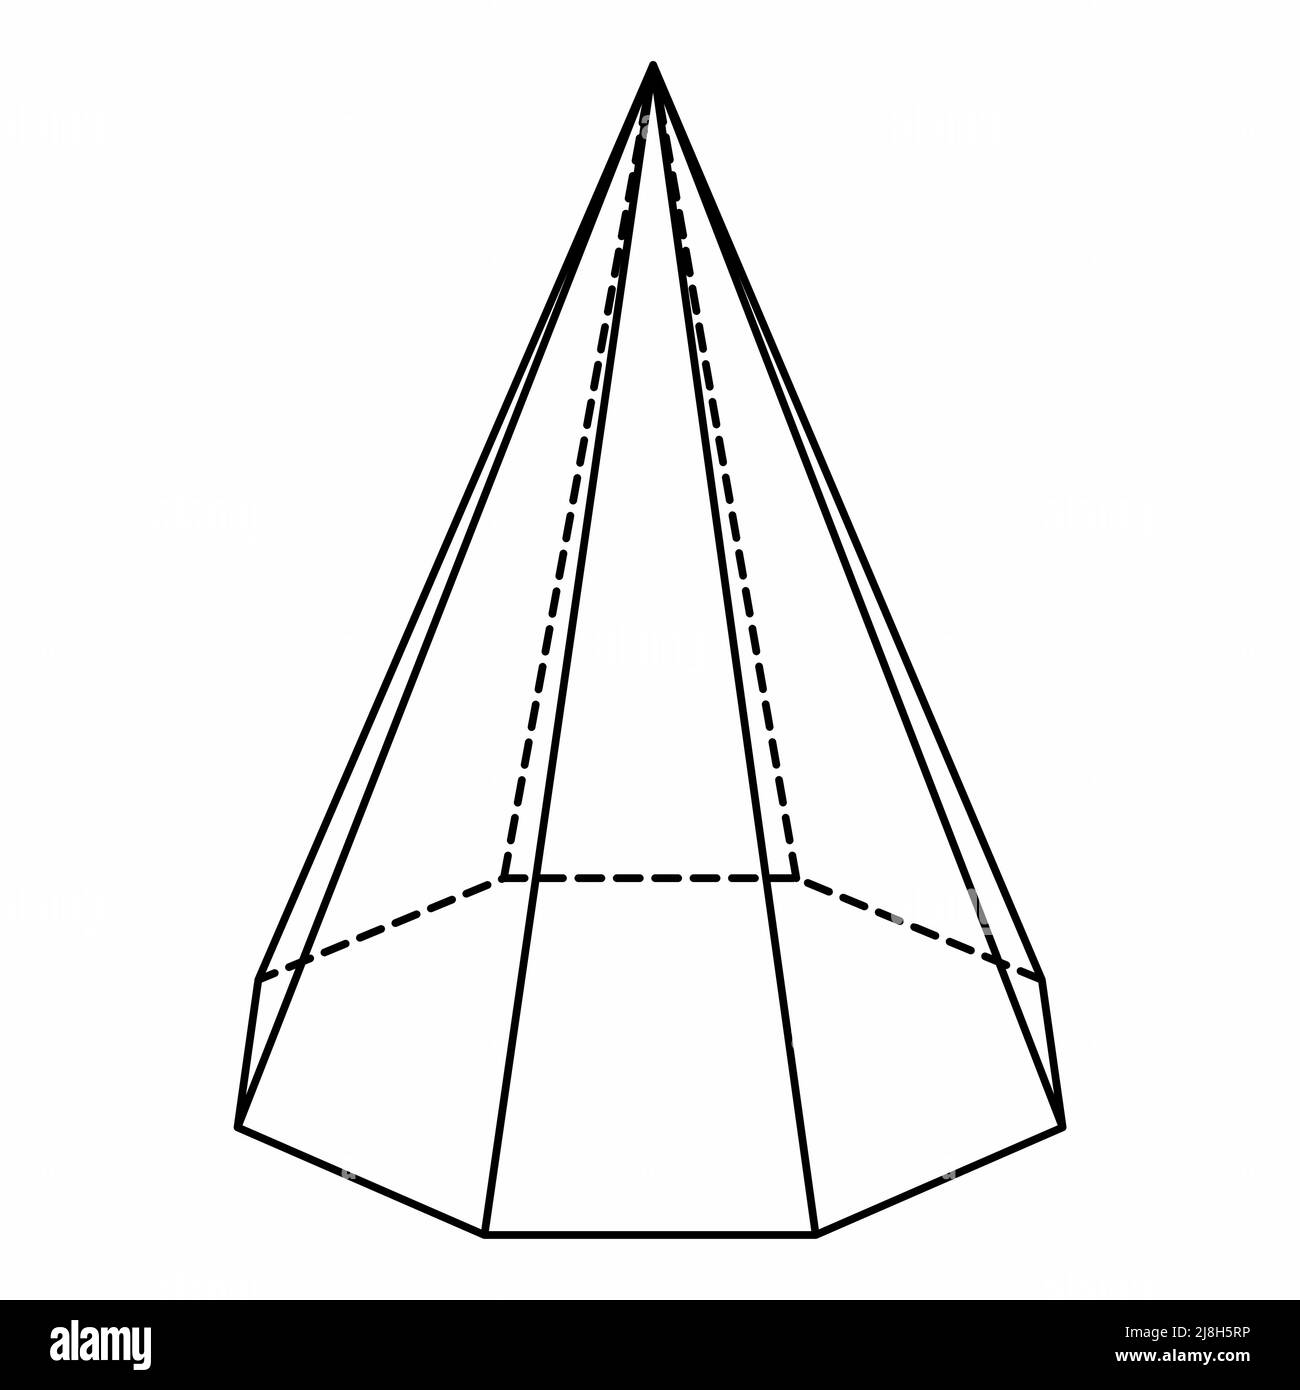 Free net of hexagonal Pyramid